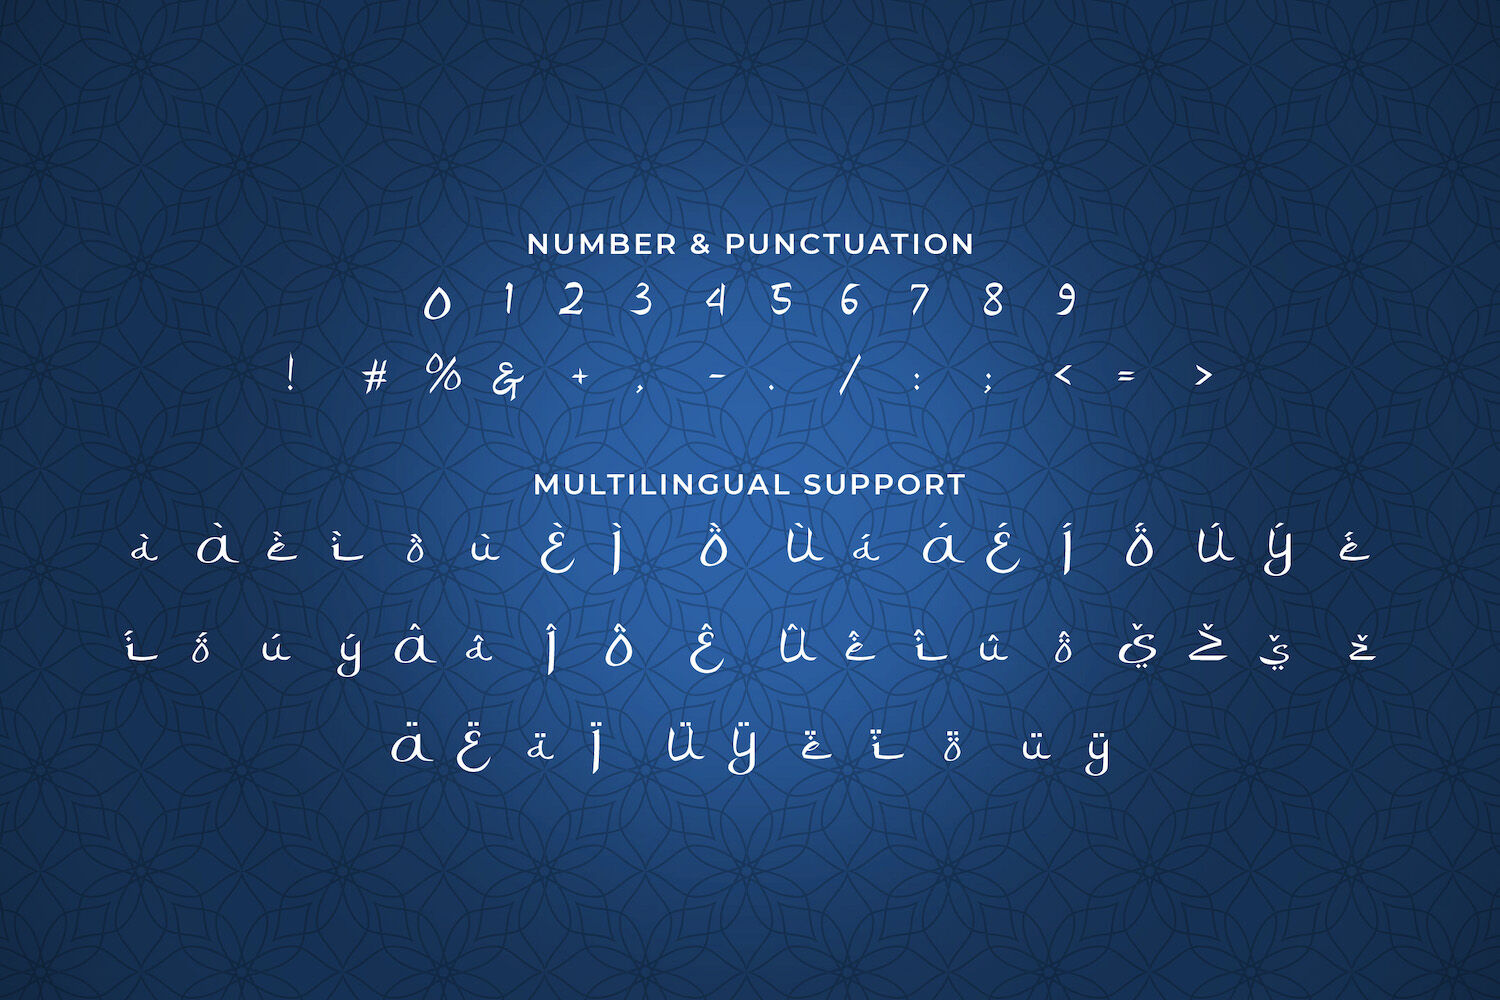 Islamic Romance Arabic Font Duo By Stringlabs Thehungryjpeg Com